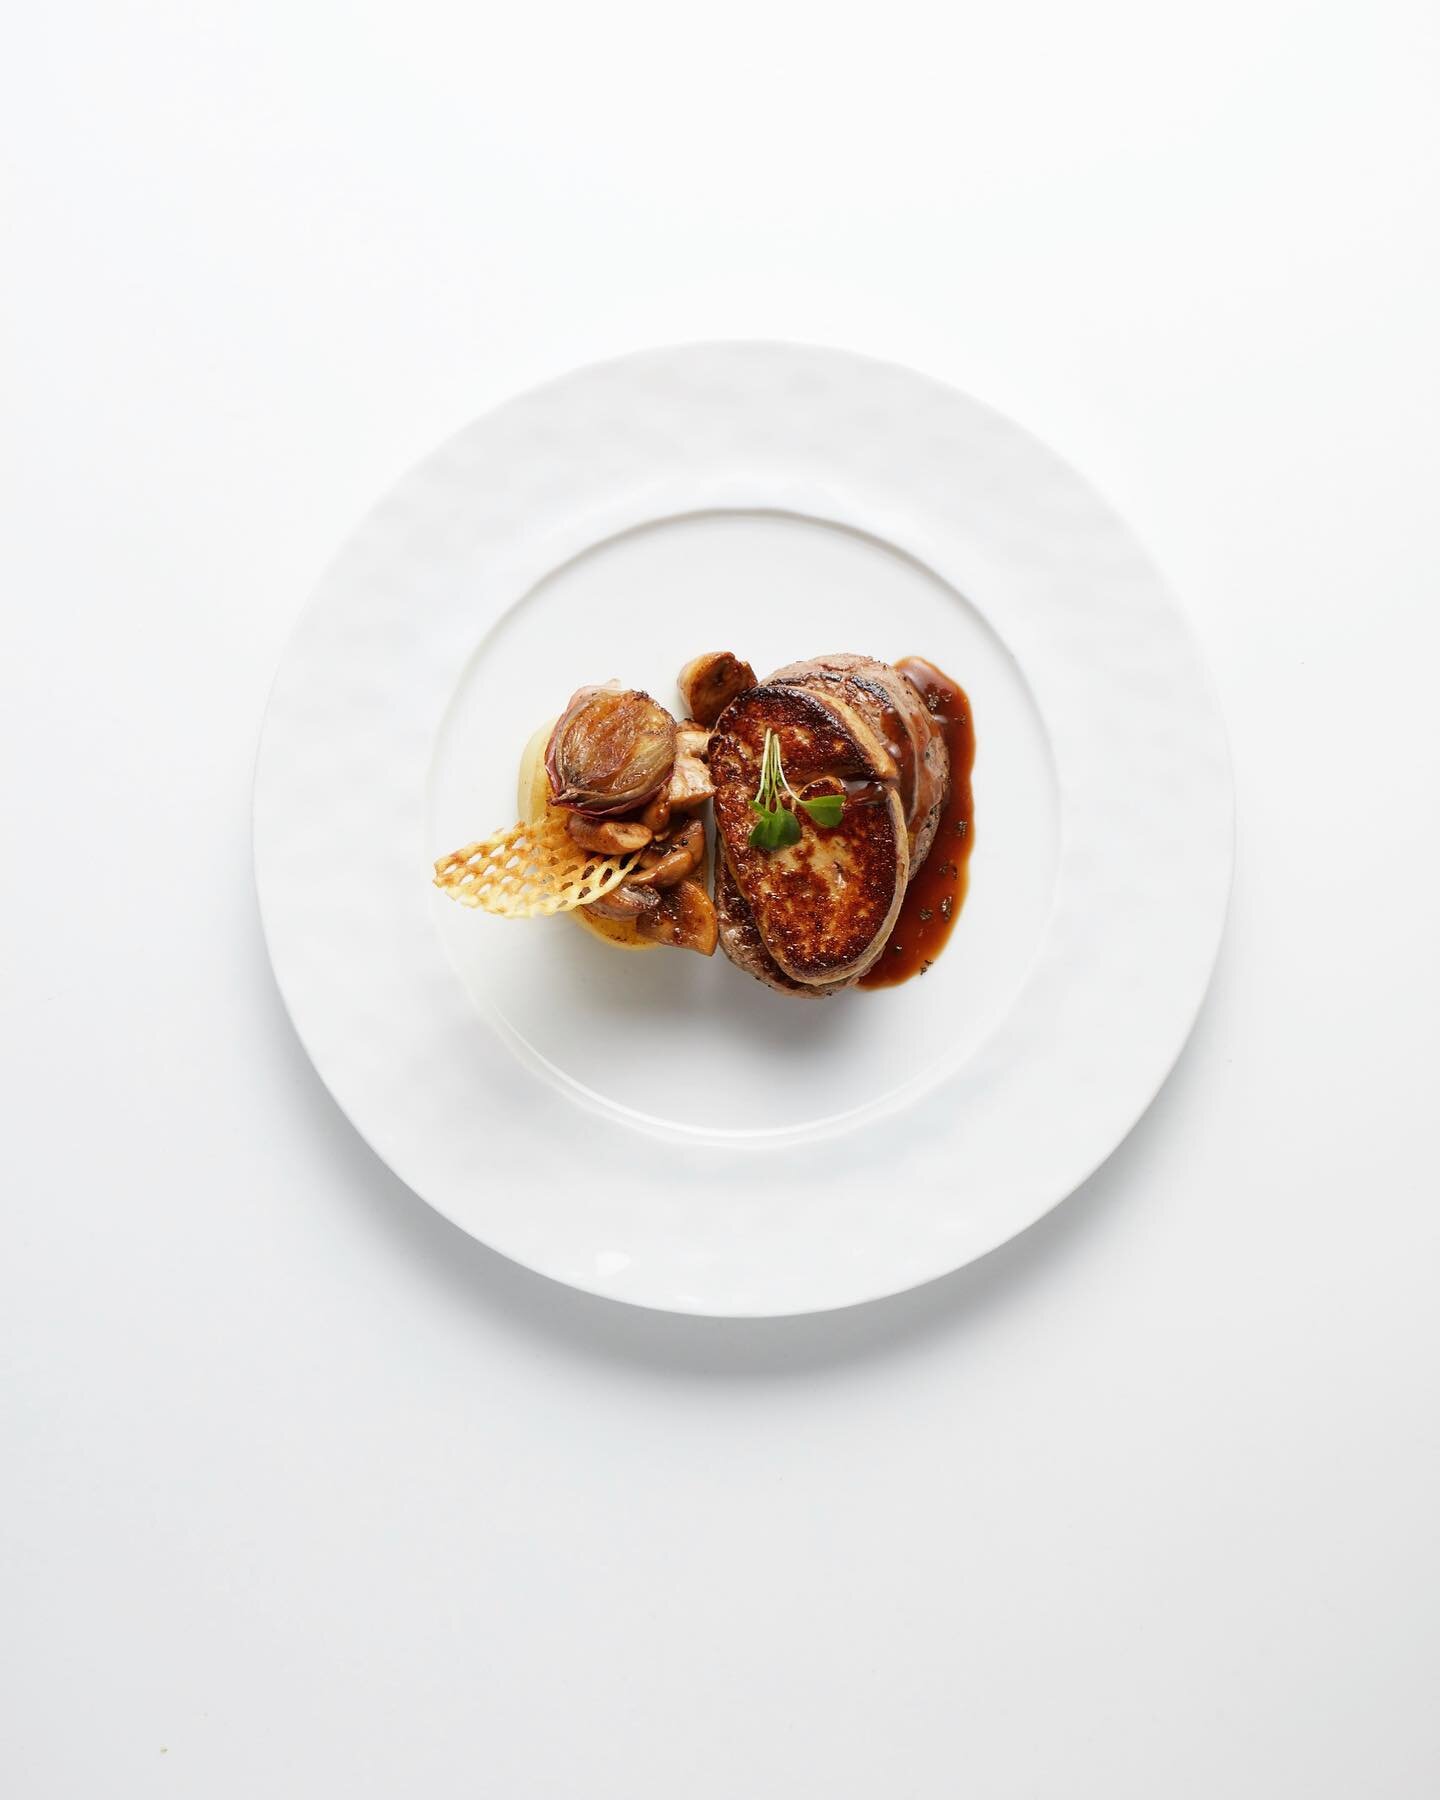 Beef Rossini for @norwegiancruiseline Prima Class Dining 

#cruise #dining #finedining #nclprima #restaurant #beefrossini